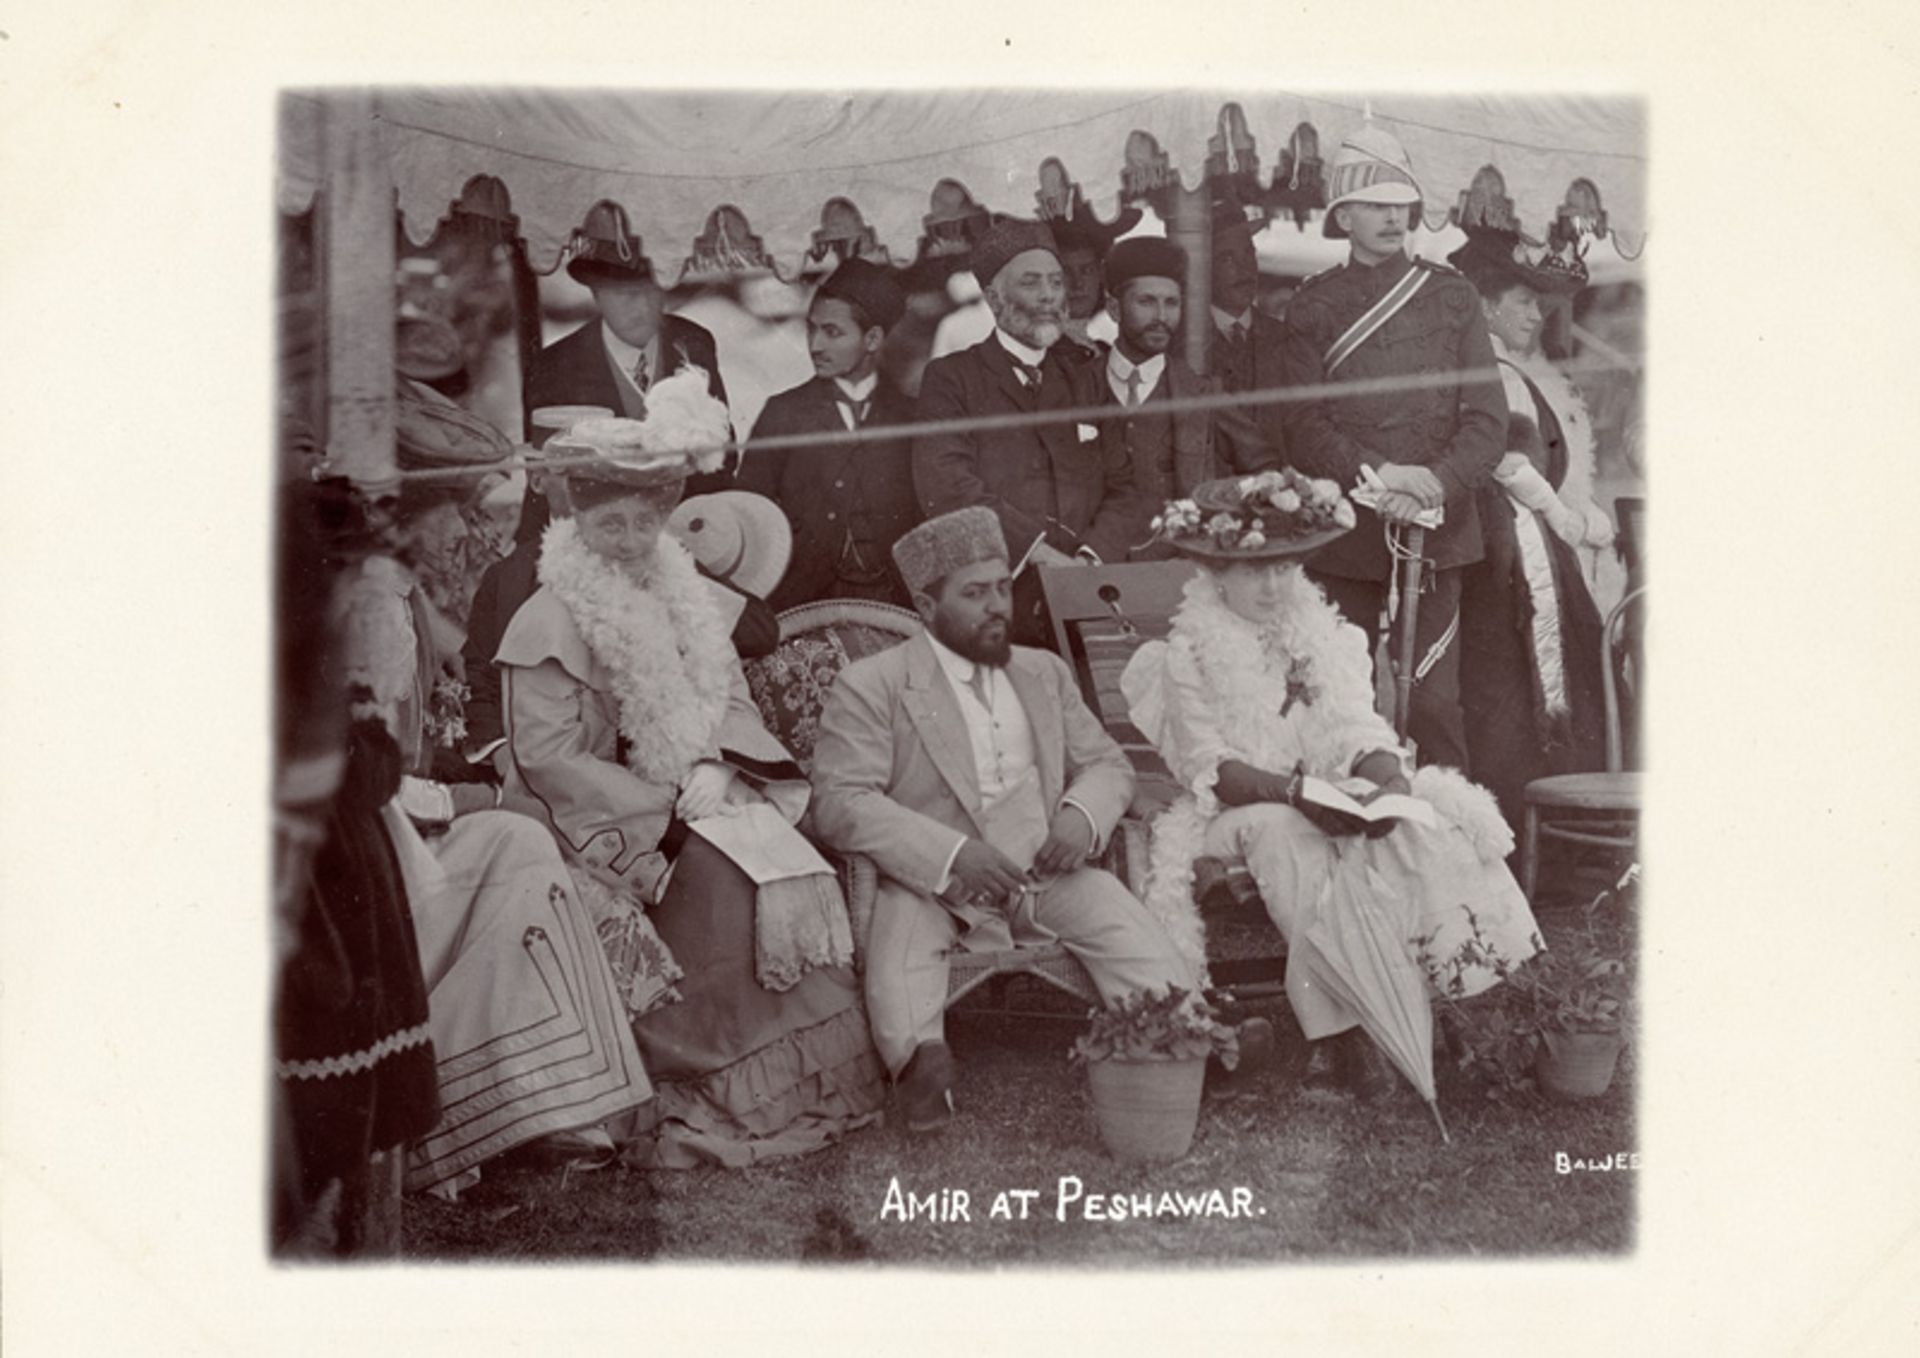 British India: Views of Pakistan and North India